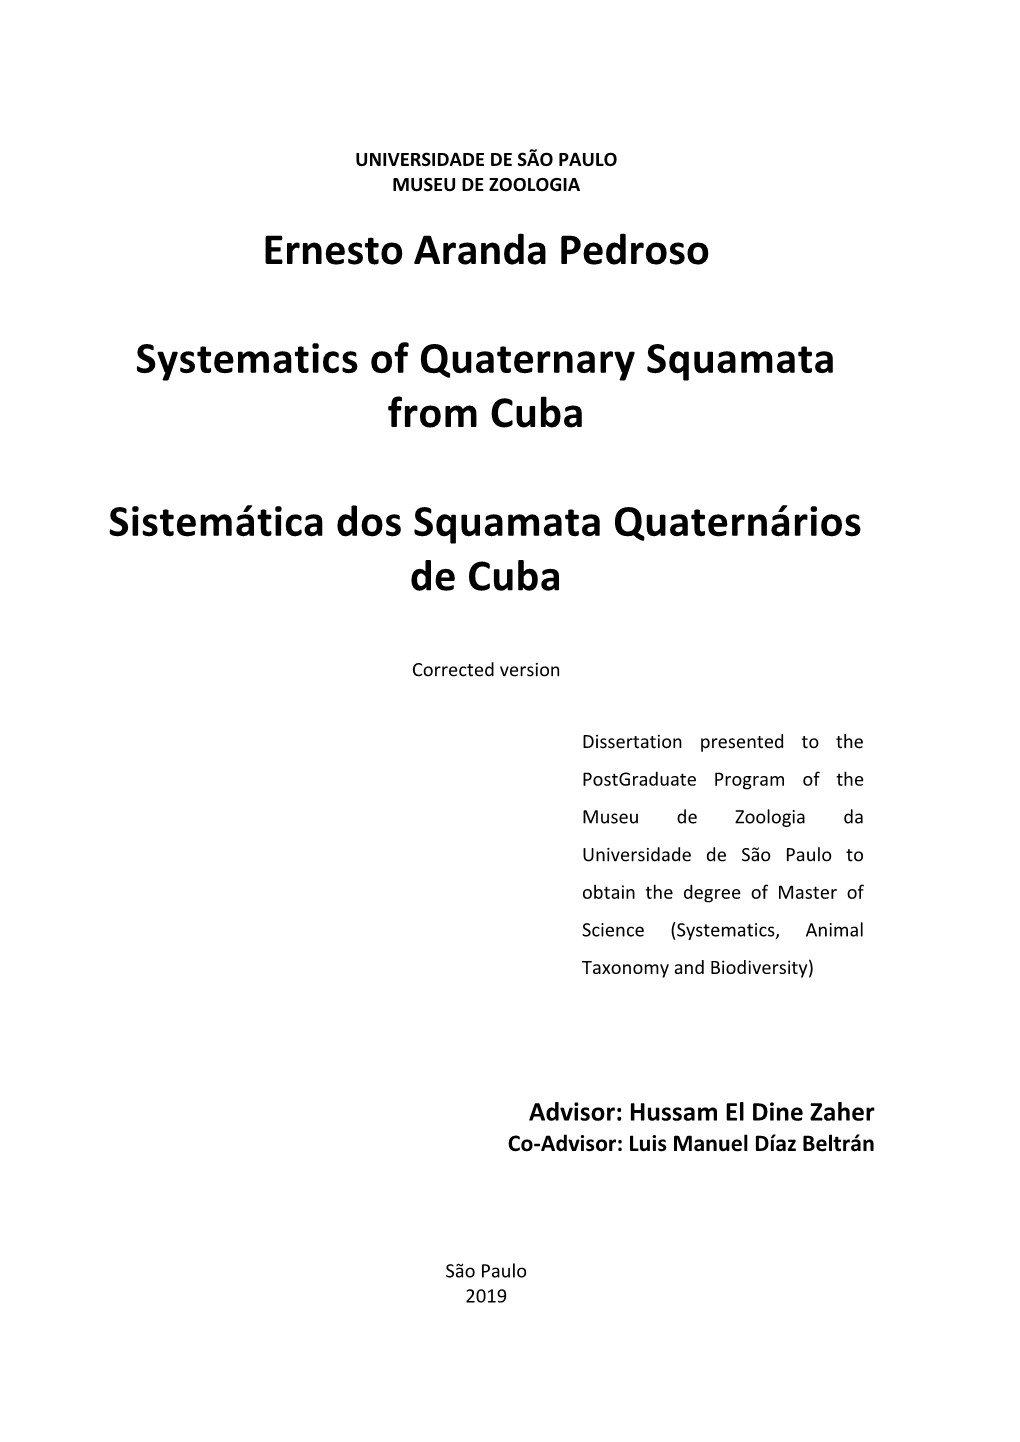 Systematics of Quaternary Squamata from Cuba